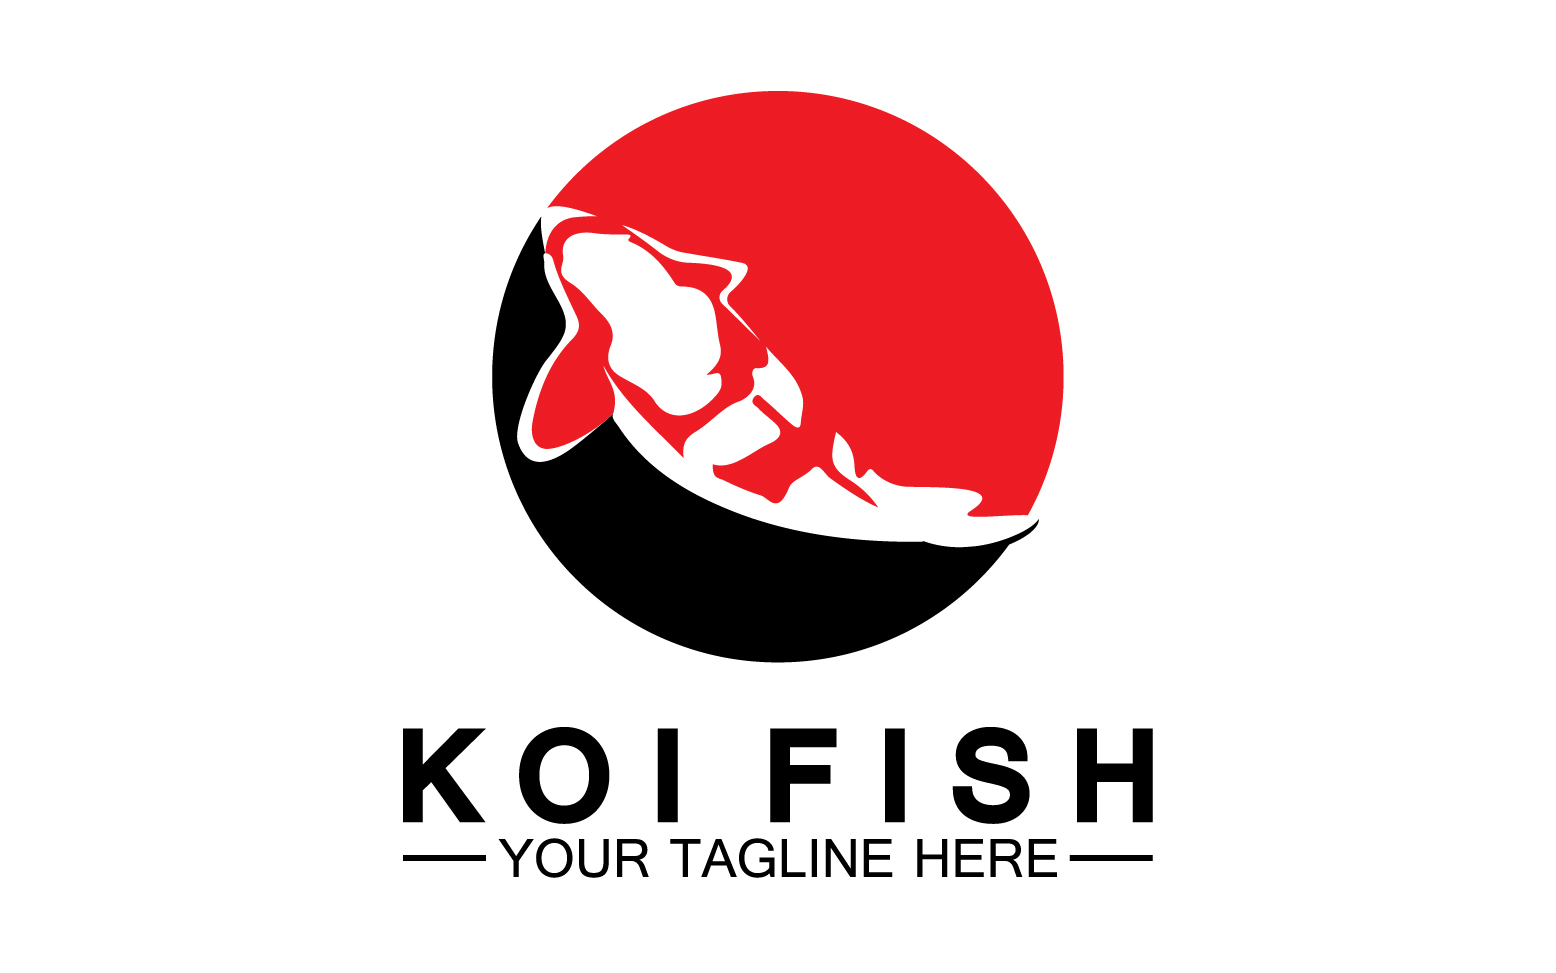 Fish koi black and red icon logo vector v44